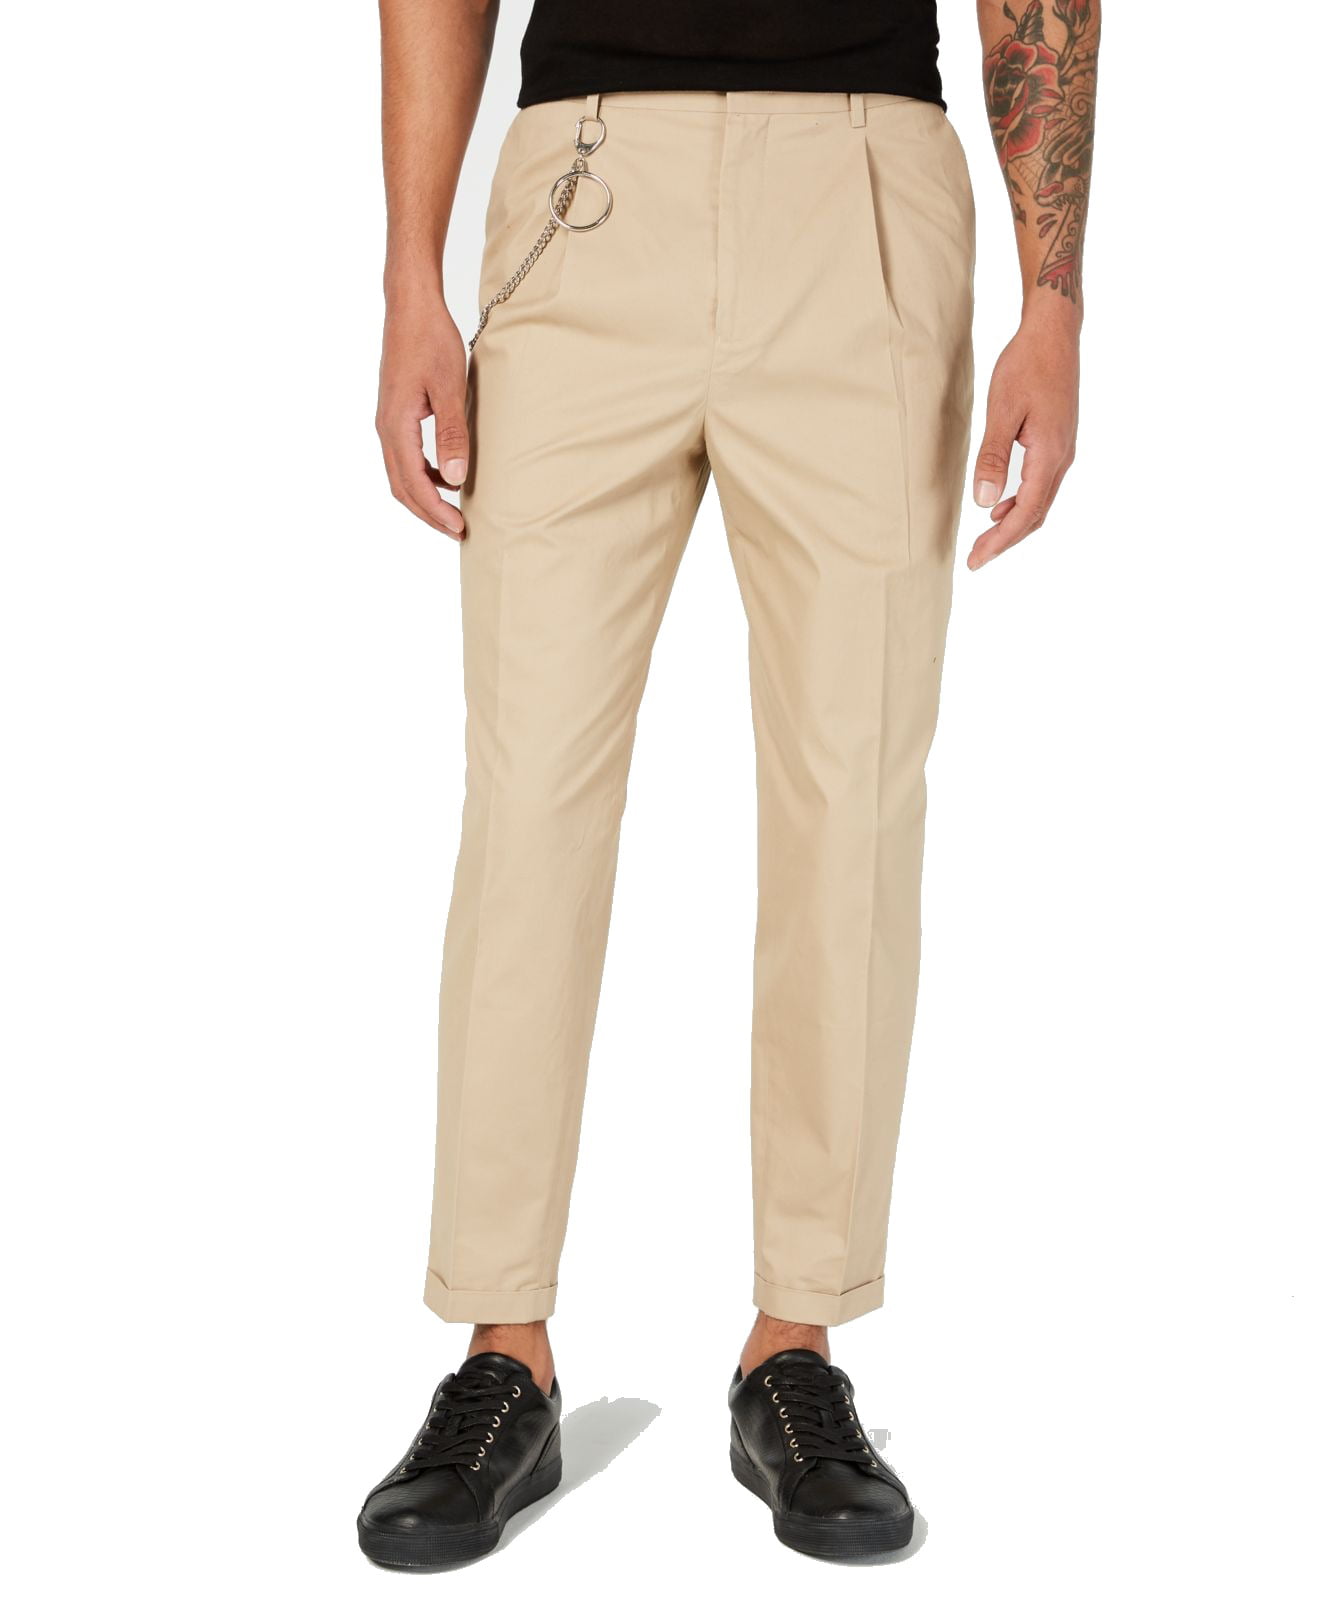 INC Pants - Men's Pants Beige 38X27 Regular Fit Cuffed Tapered Dress ...